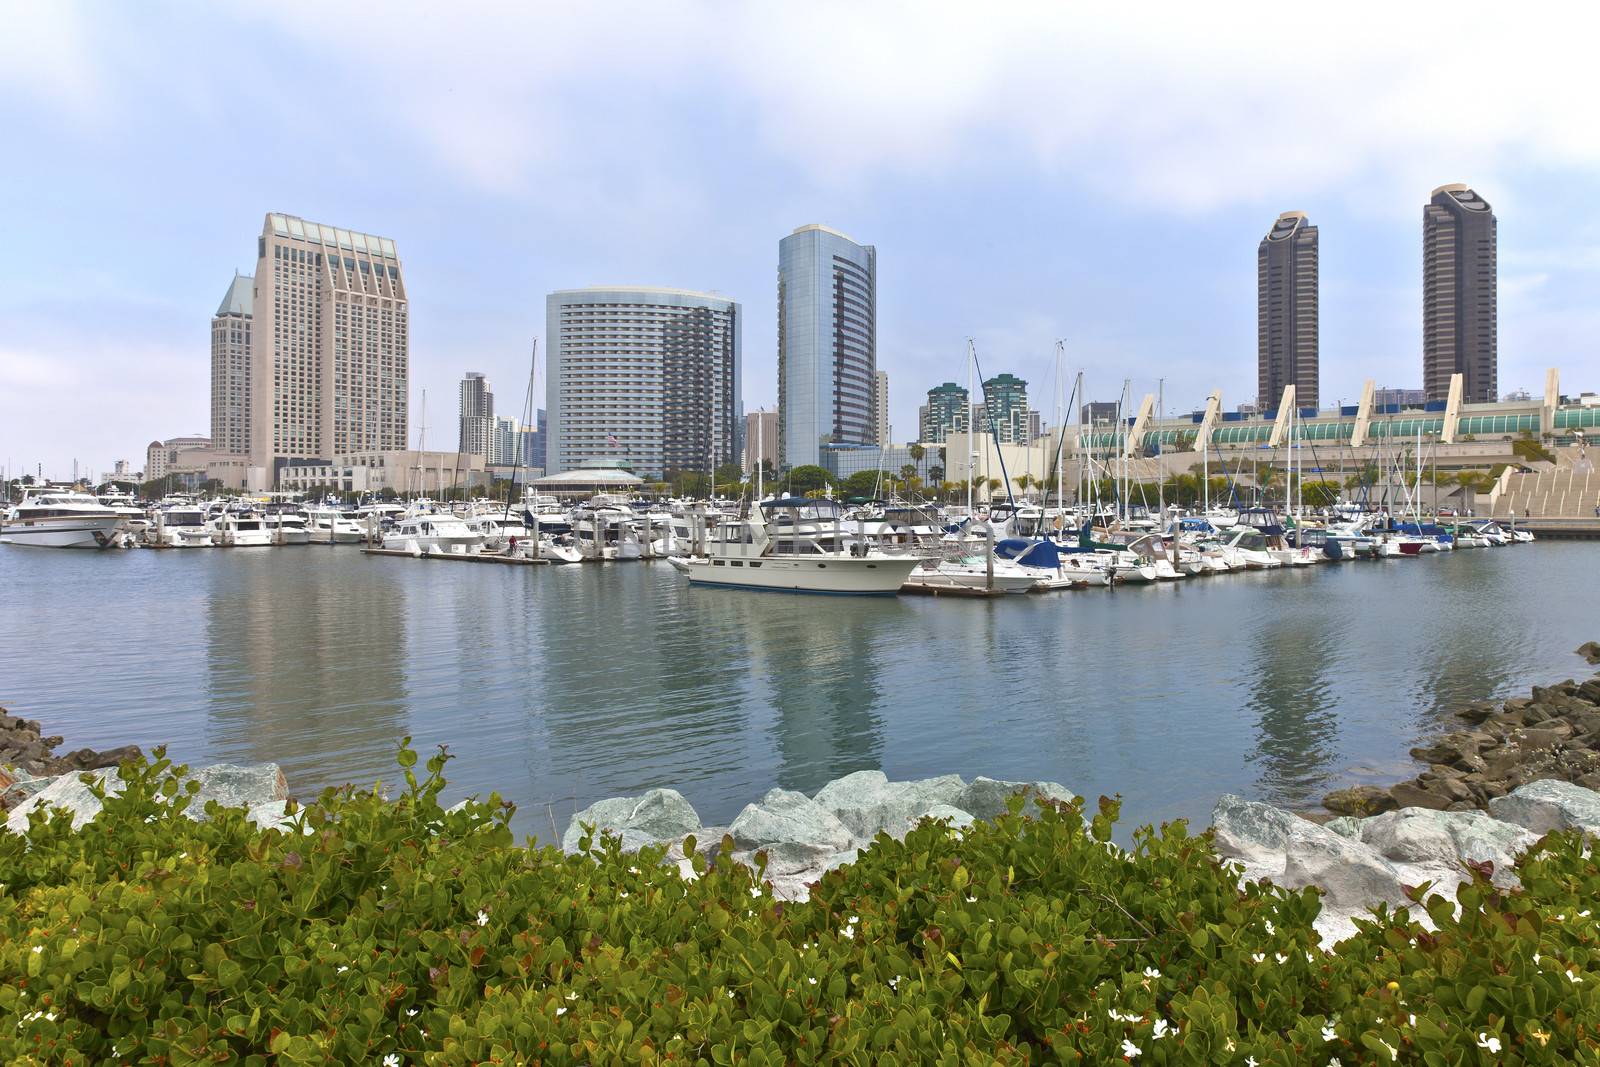 San Diego downtown marina and skyline buildings.